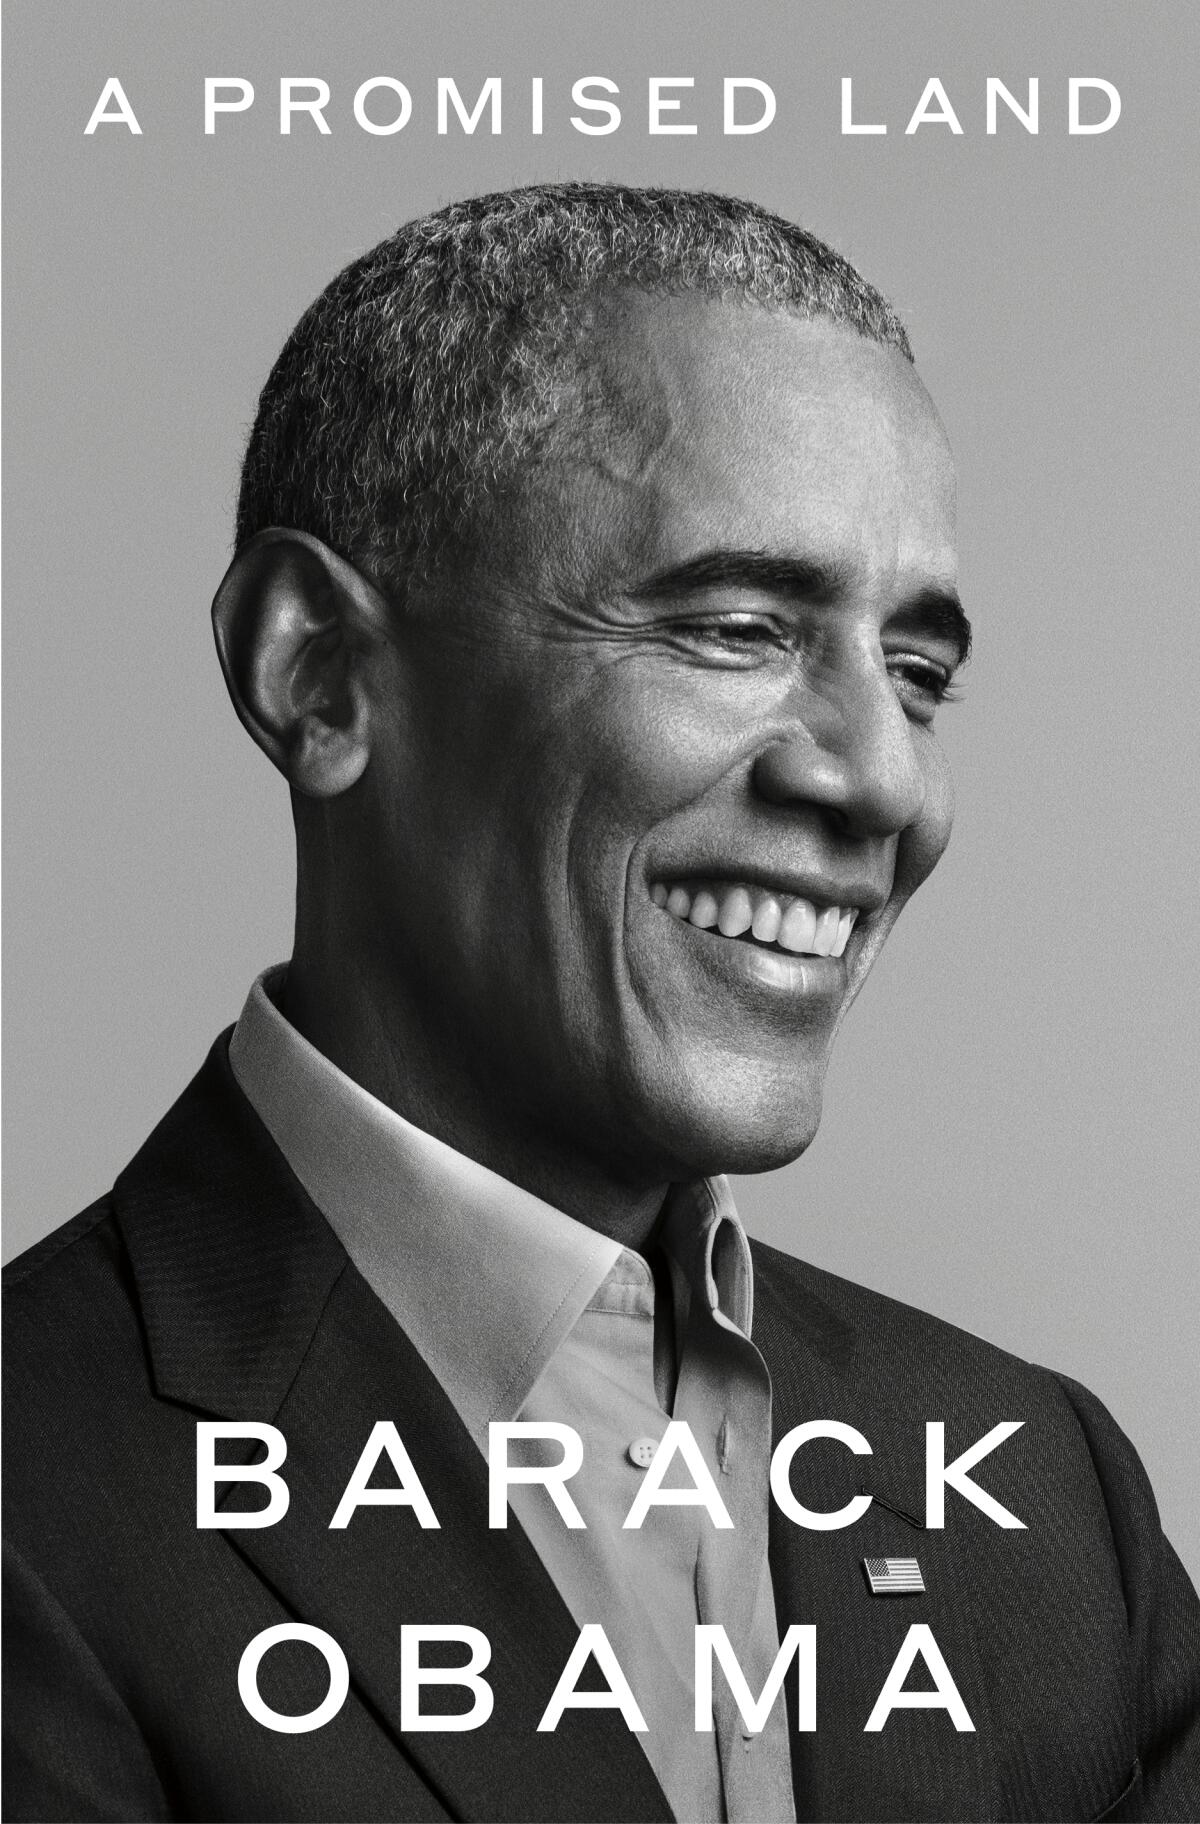 "A Promised Land" by Barack Obama.